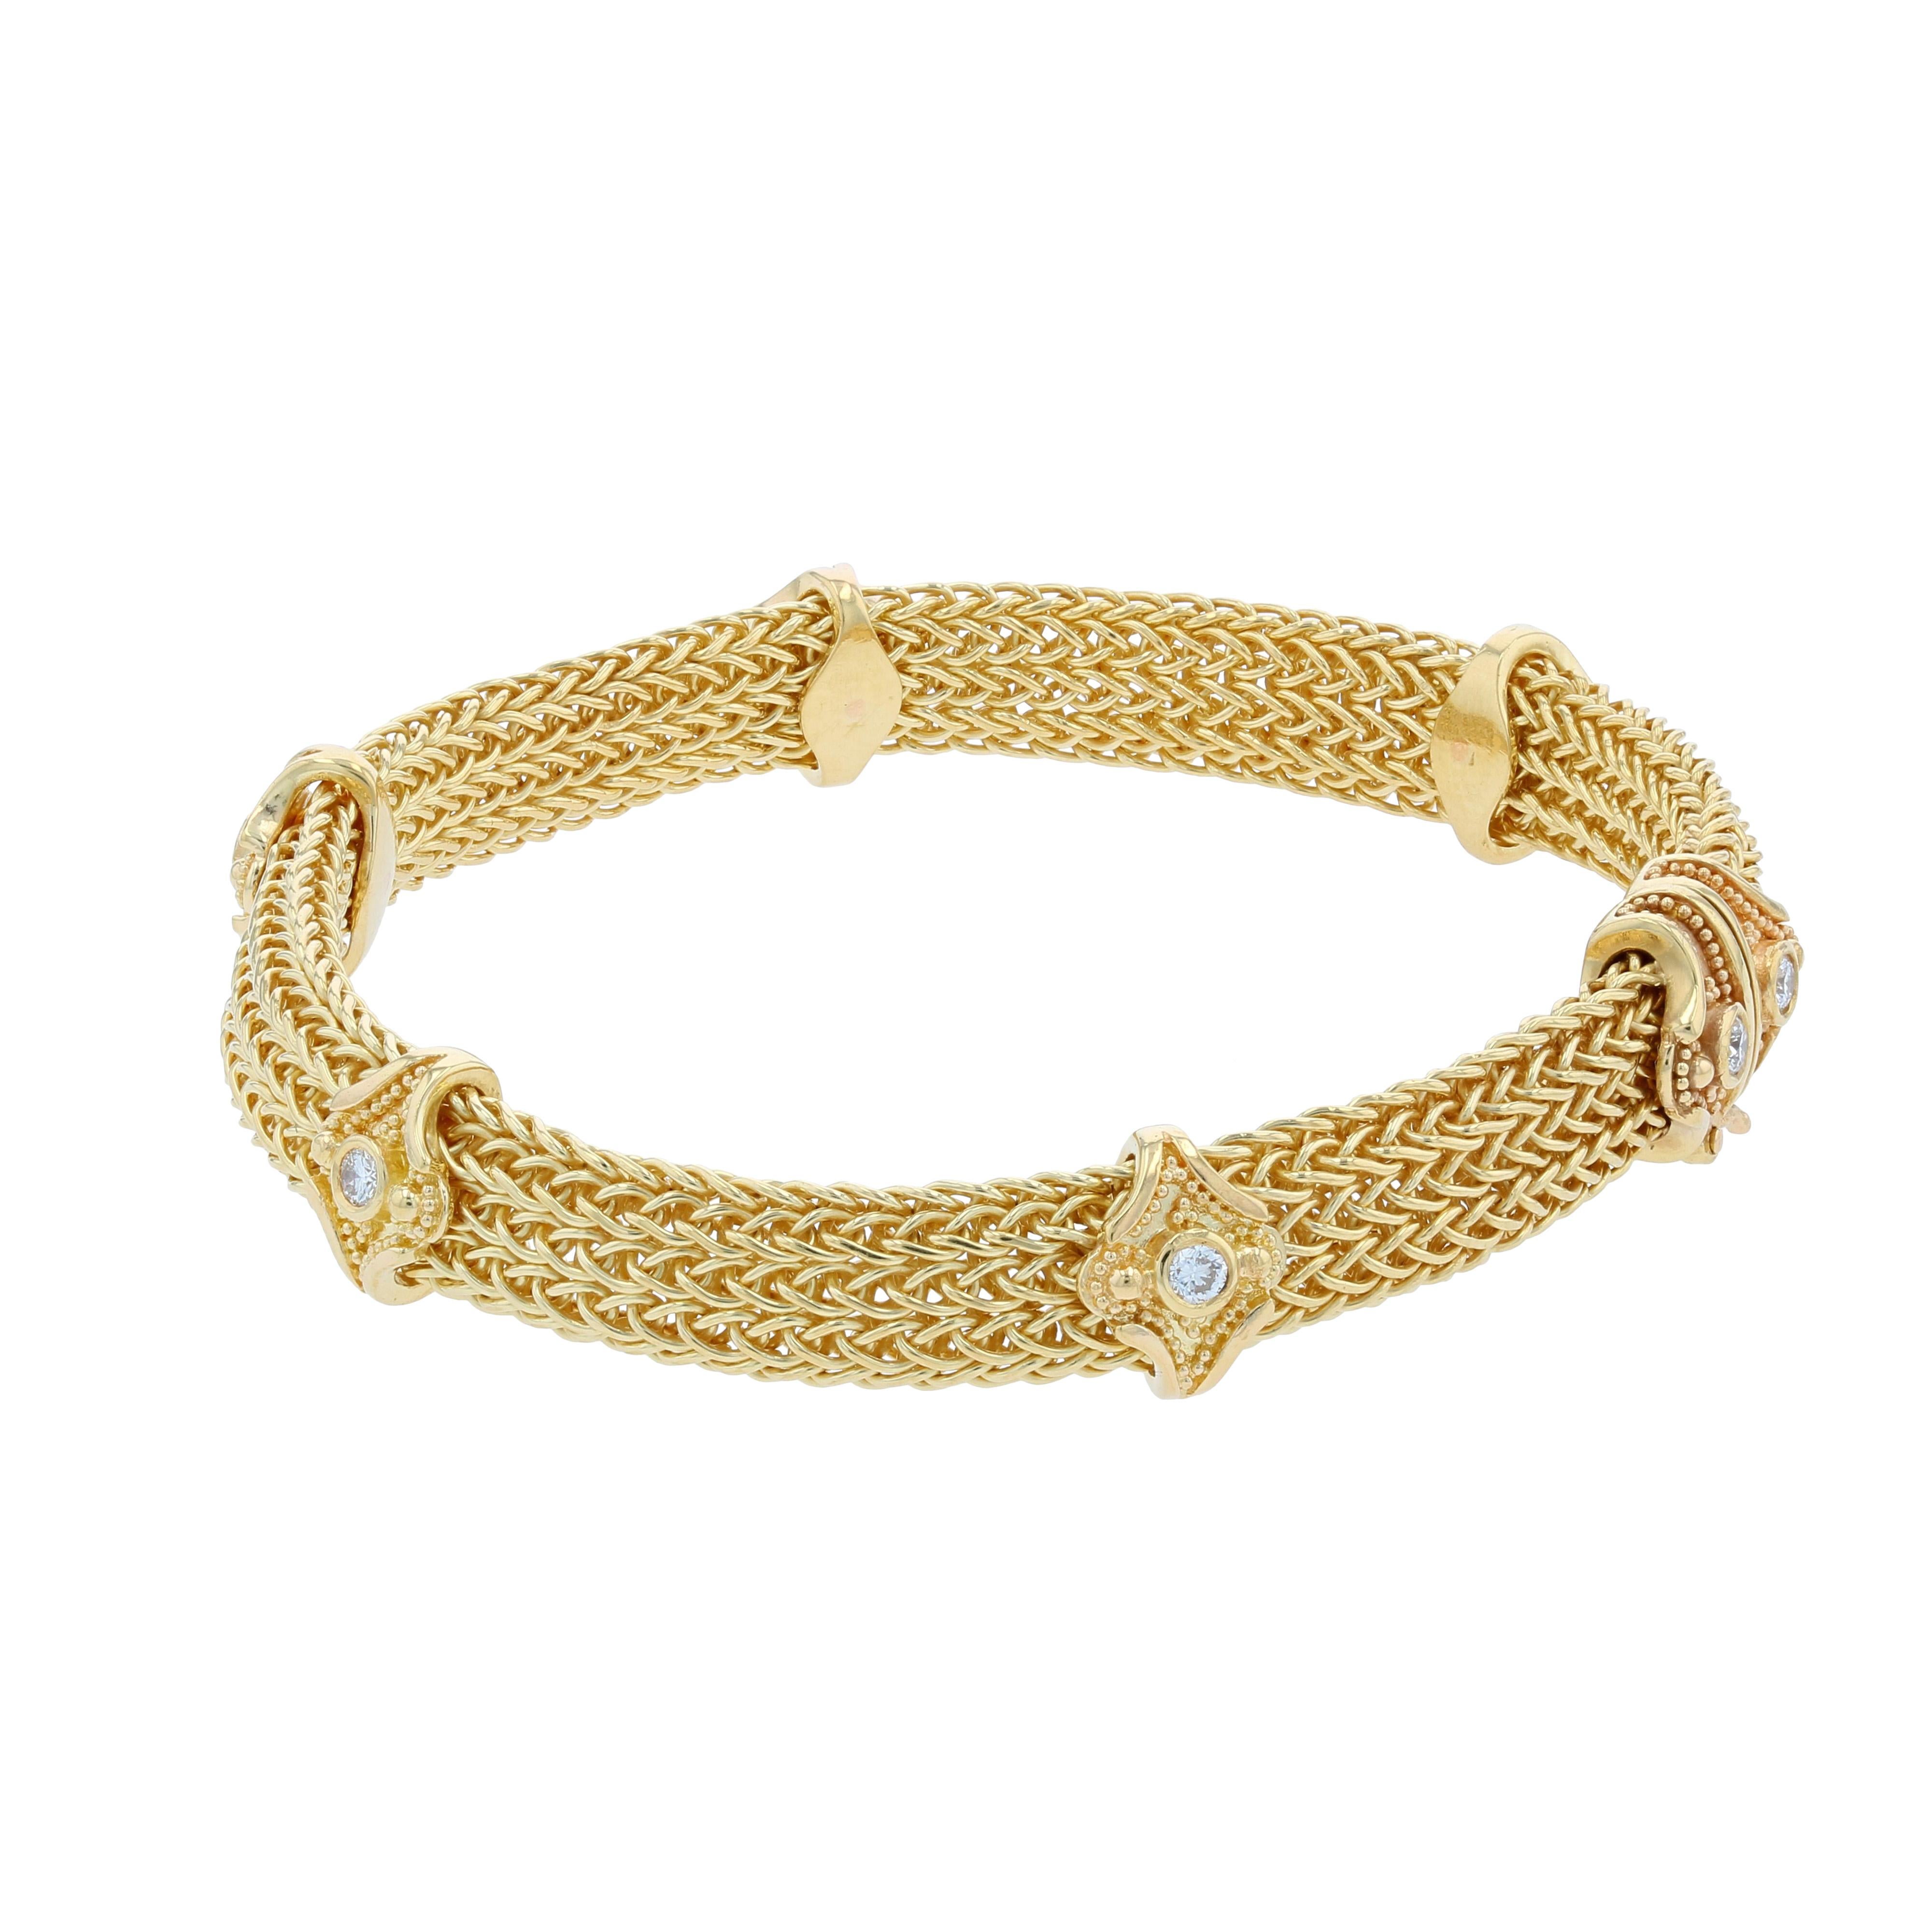 Brilliant Cut Kent Raible 18 Karat Gold Woven Chain Bracelet with Diamonds and Granulation